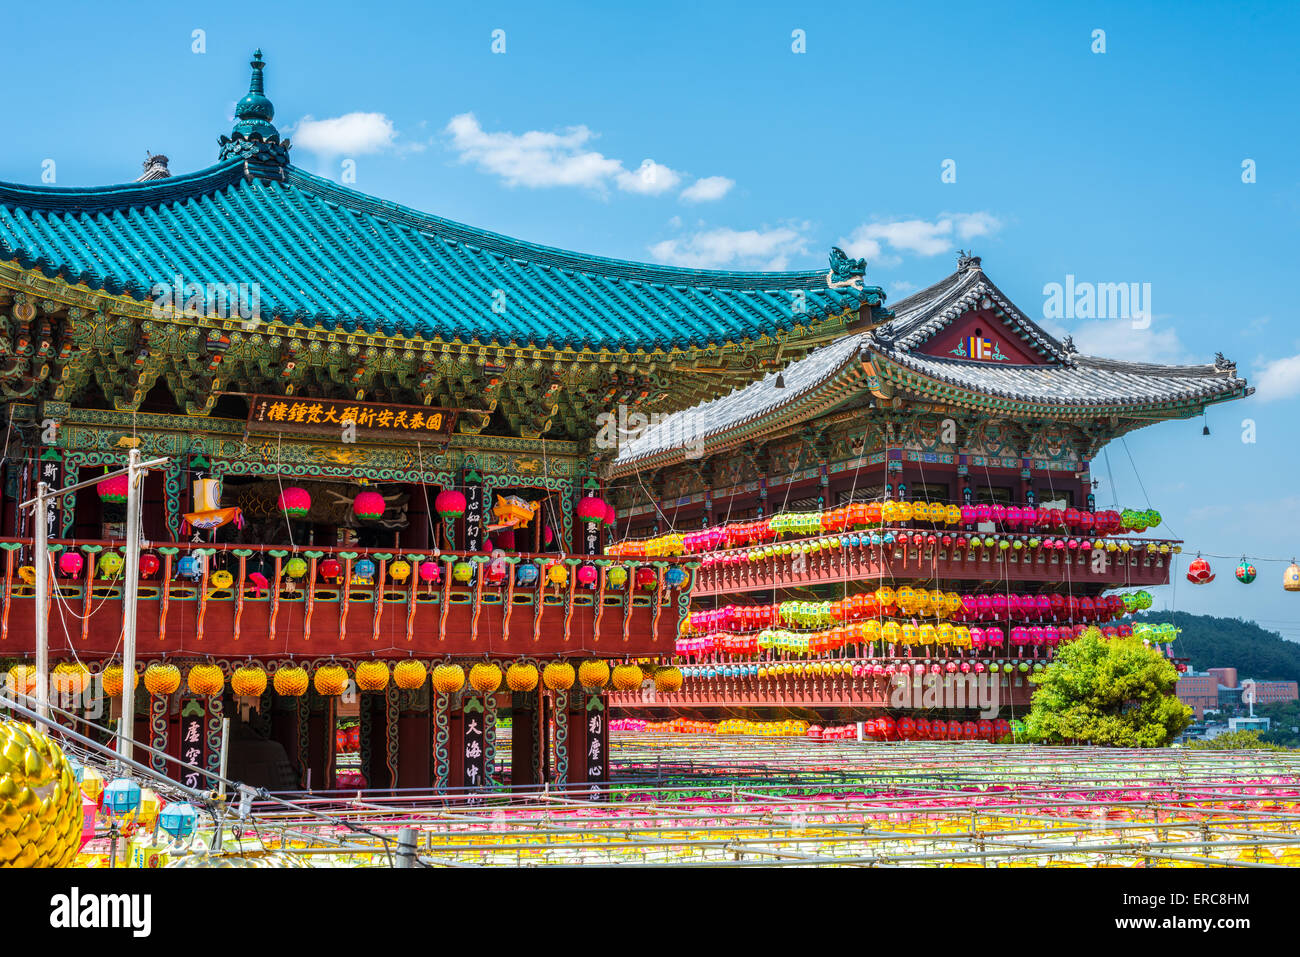 Samgwangsa, Busan is the largest Yeun Deung Hoe Lotus lantern festival in South Korea. Big temples and many lanterns Stock Photo